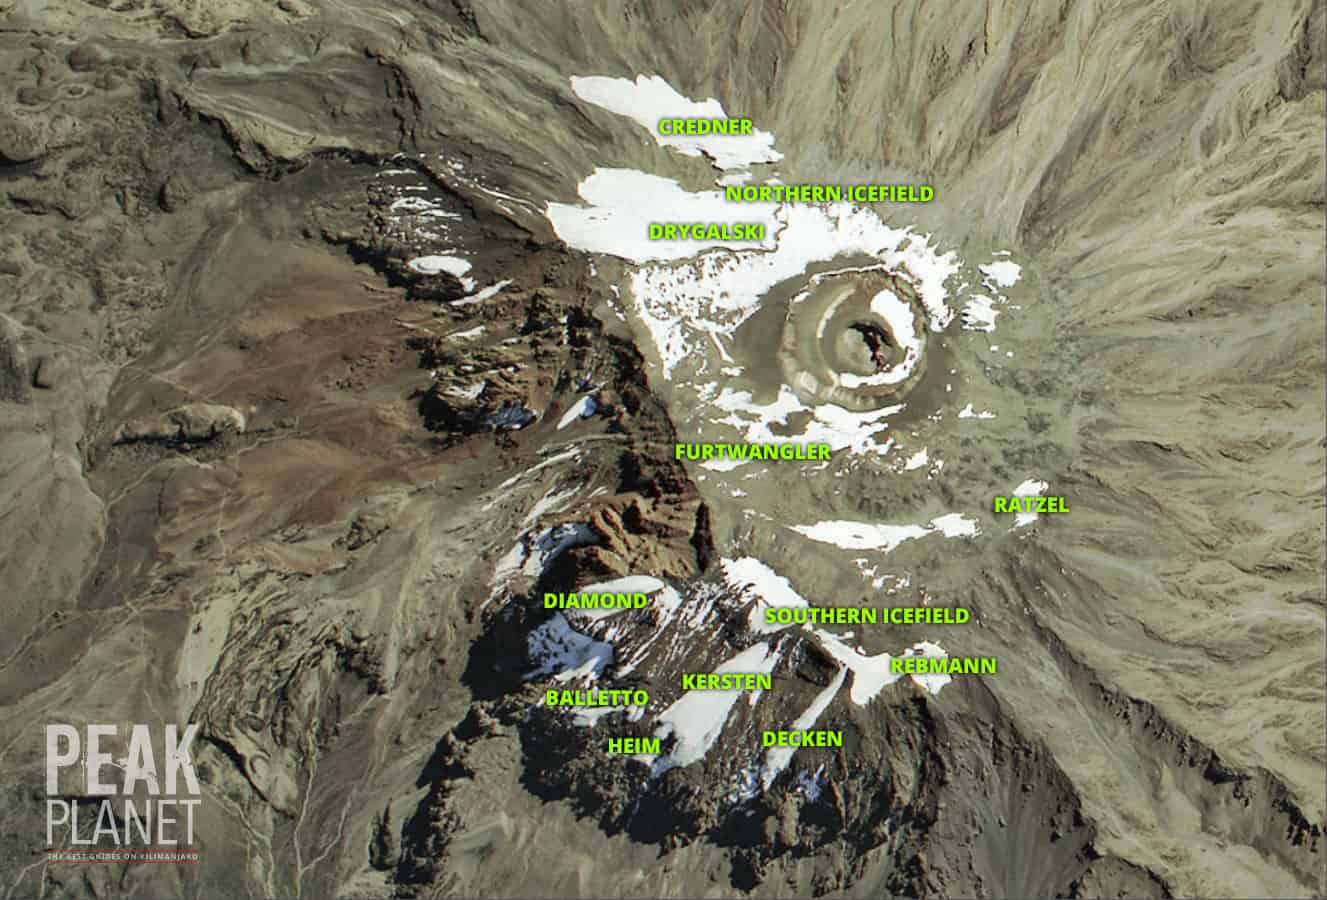 Kilimanjaro Glaciers